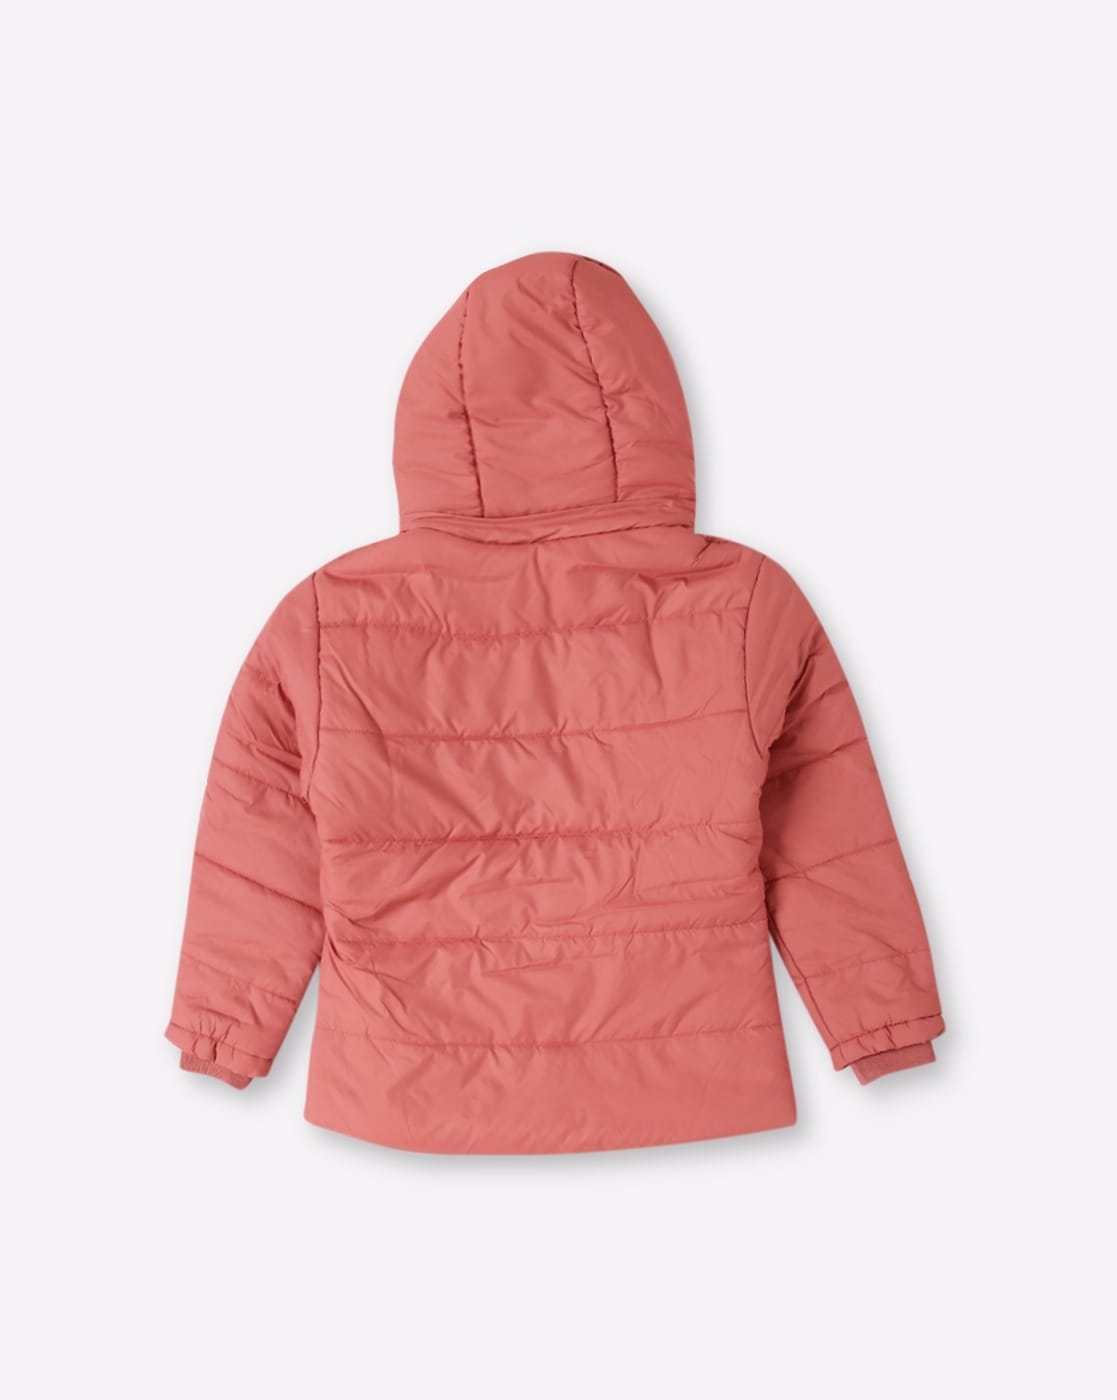 Disney Princess Hooded Rain Jacket for Girls | Disney Store